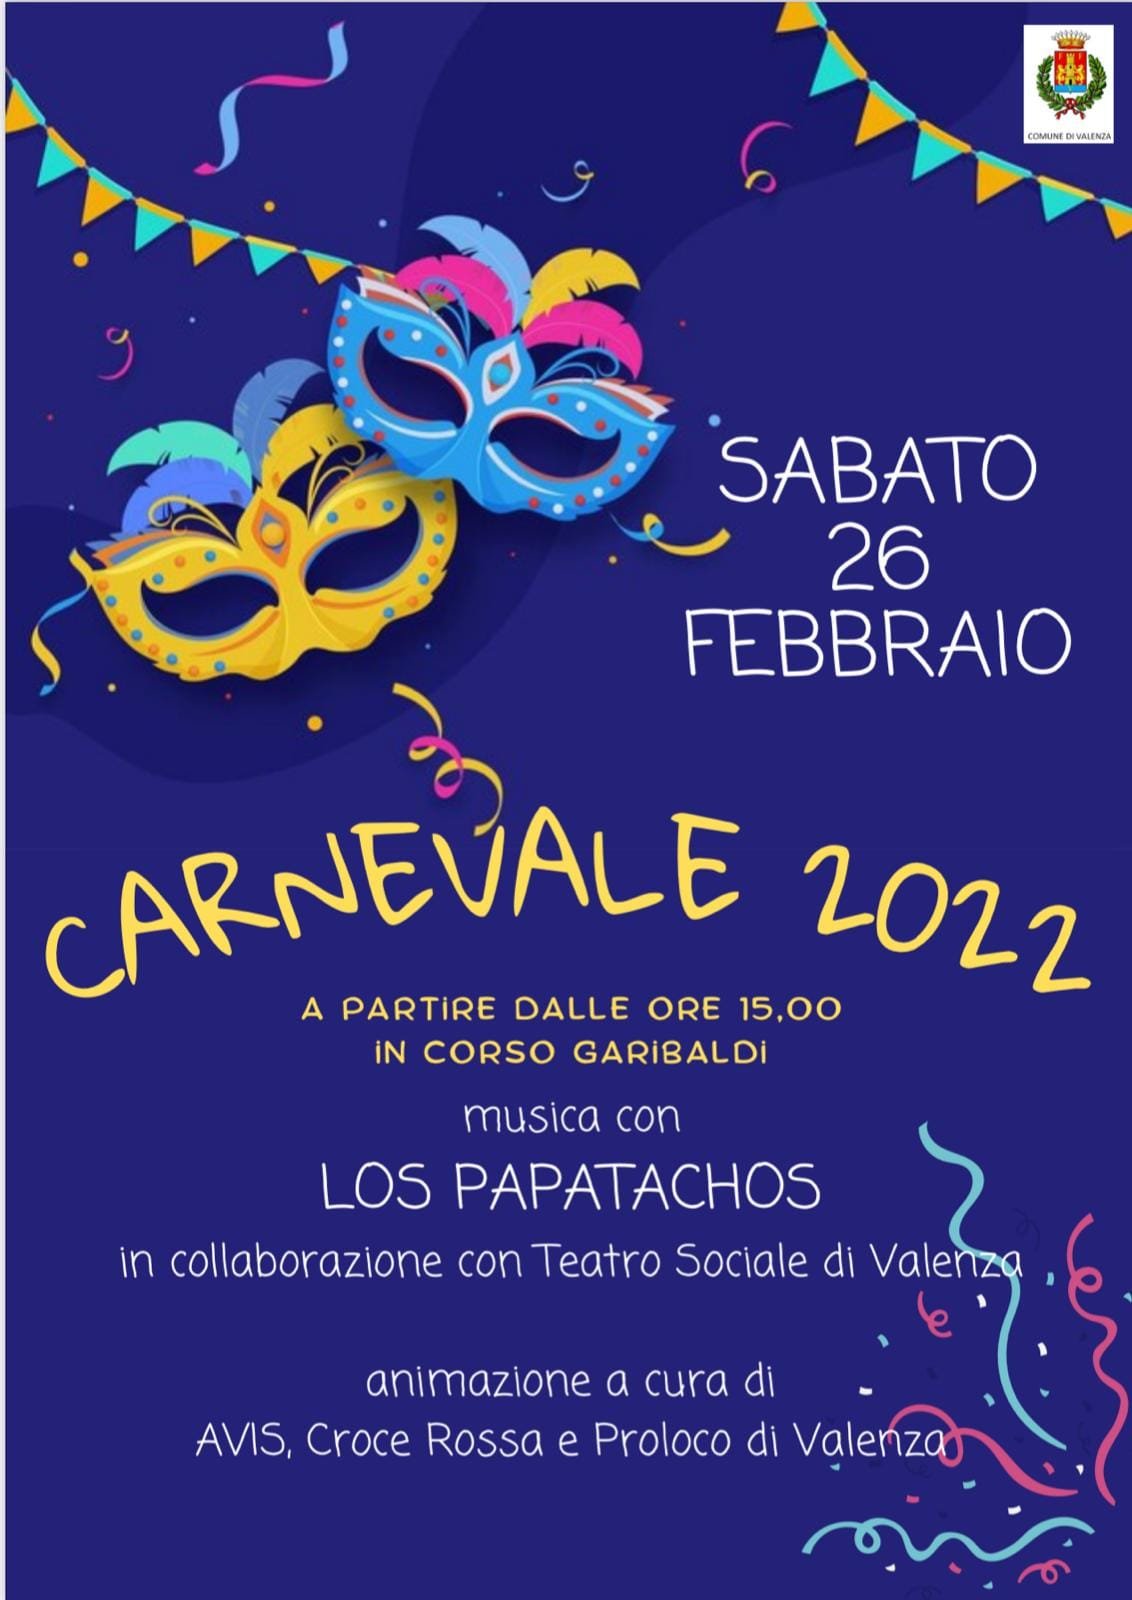 Sabato 26 febbraio Carnevale a Valenza